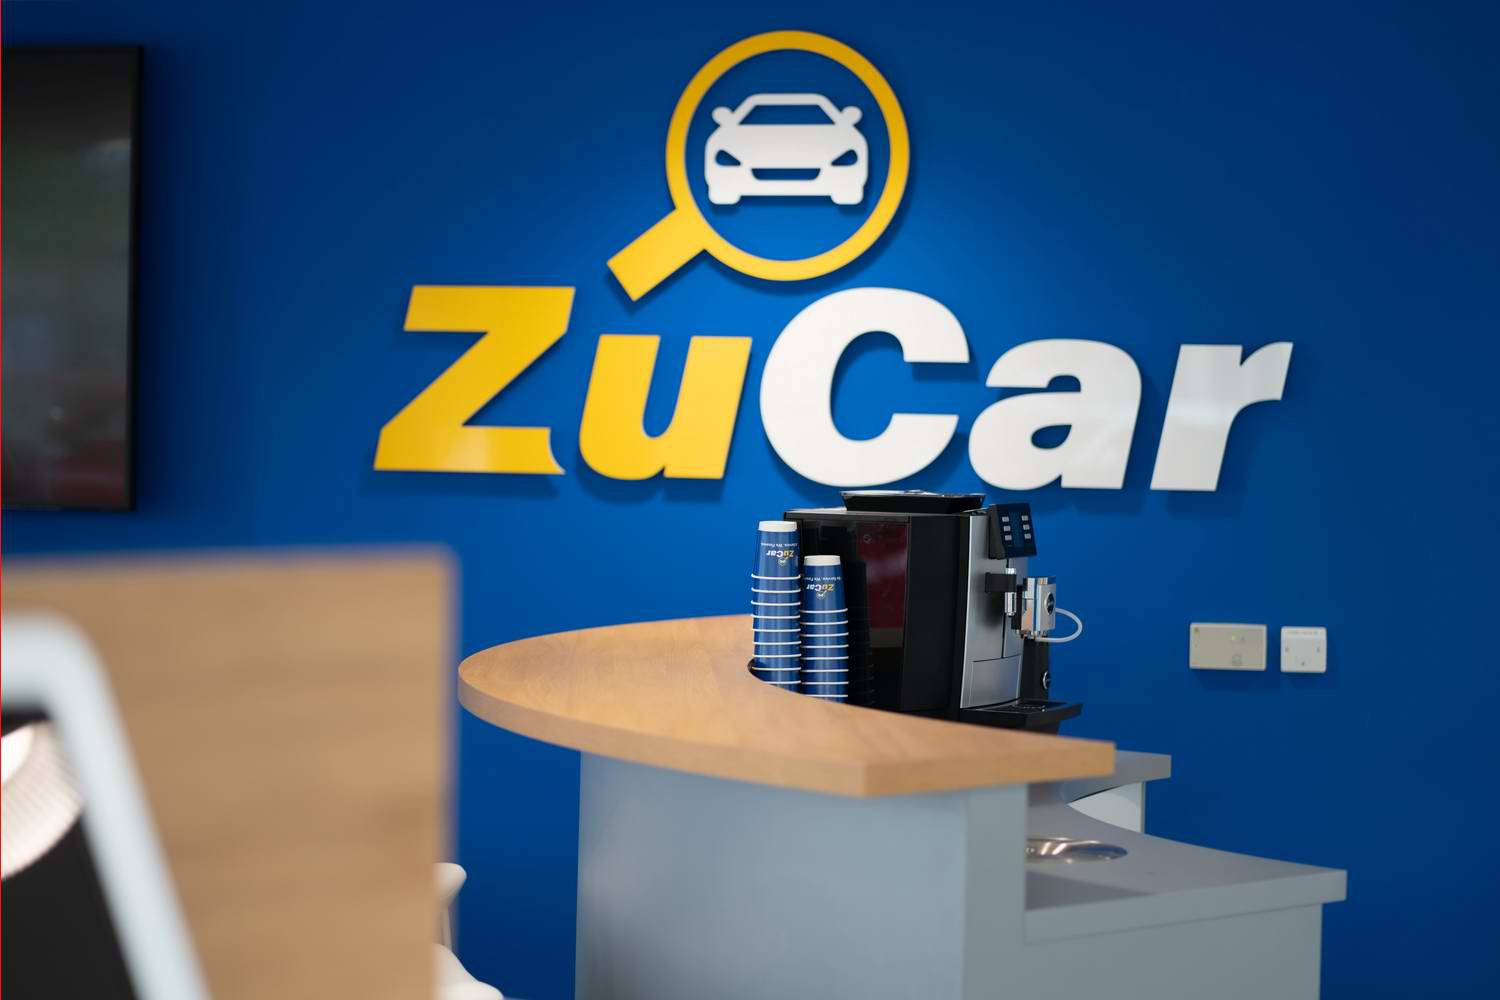 Car Industry News | ZuCar to open new showroom in Dublin | CompleteCar.ie